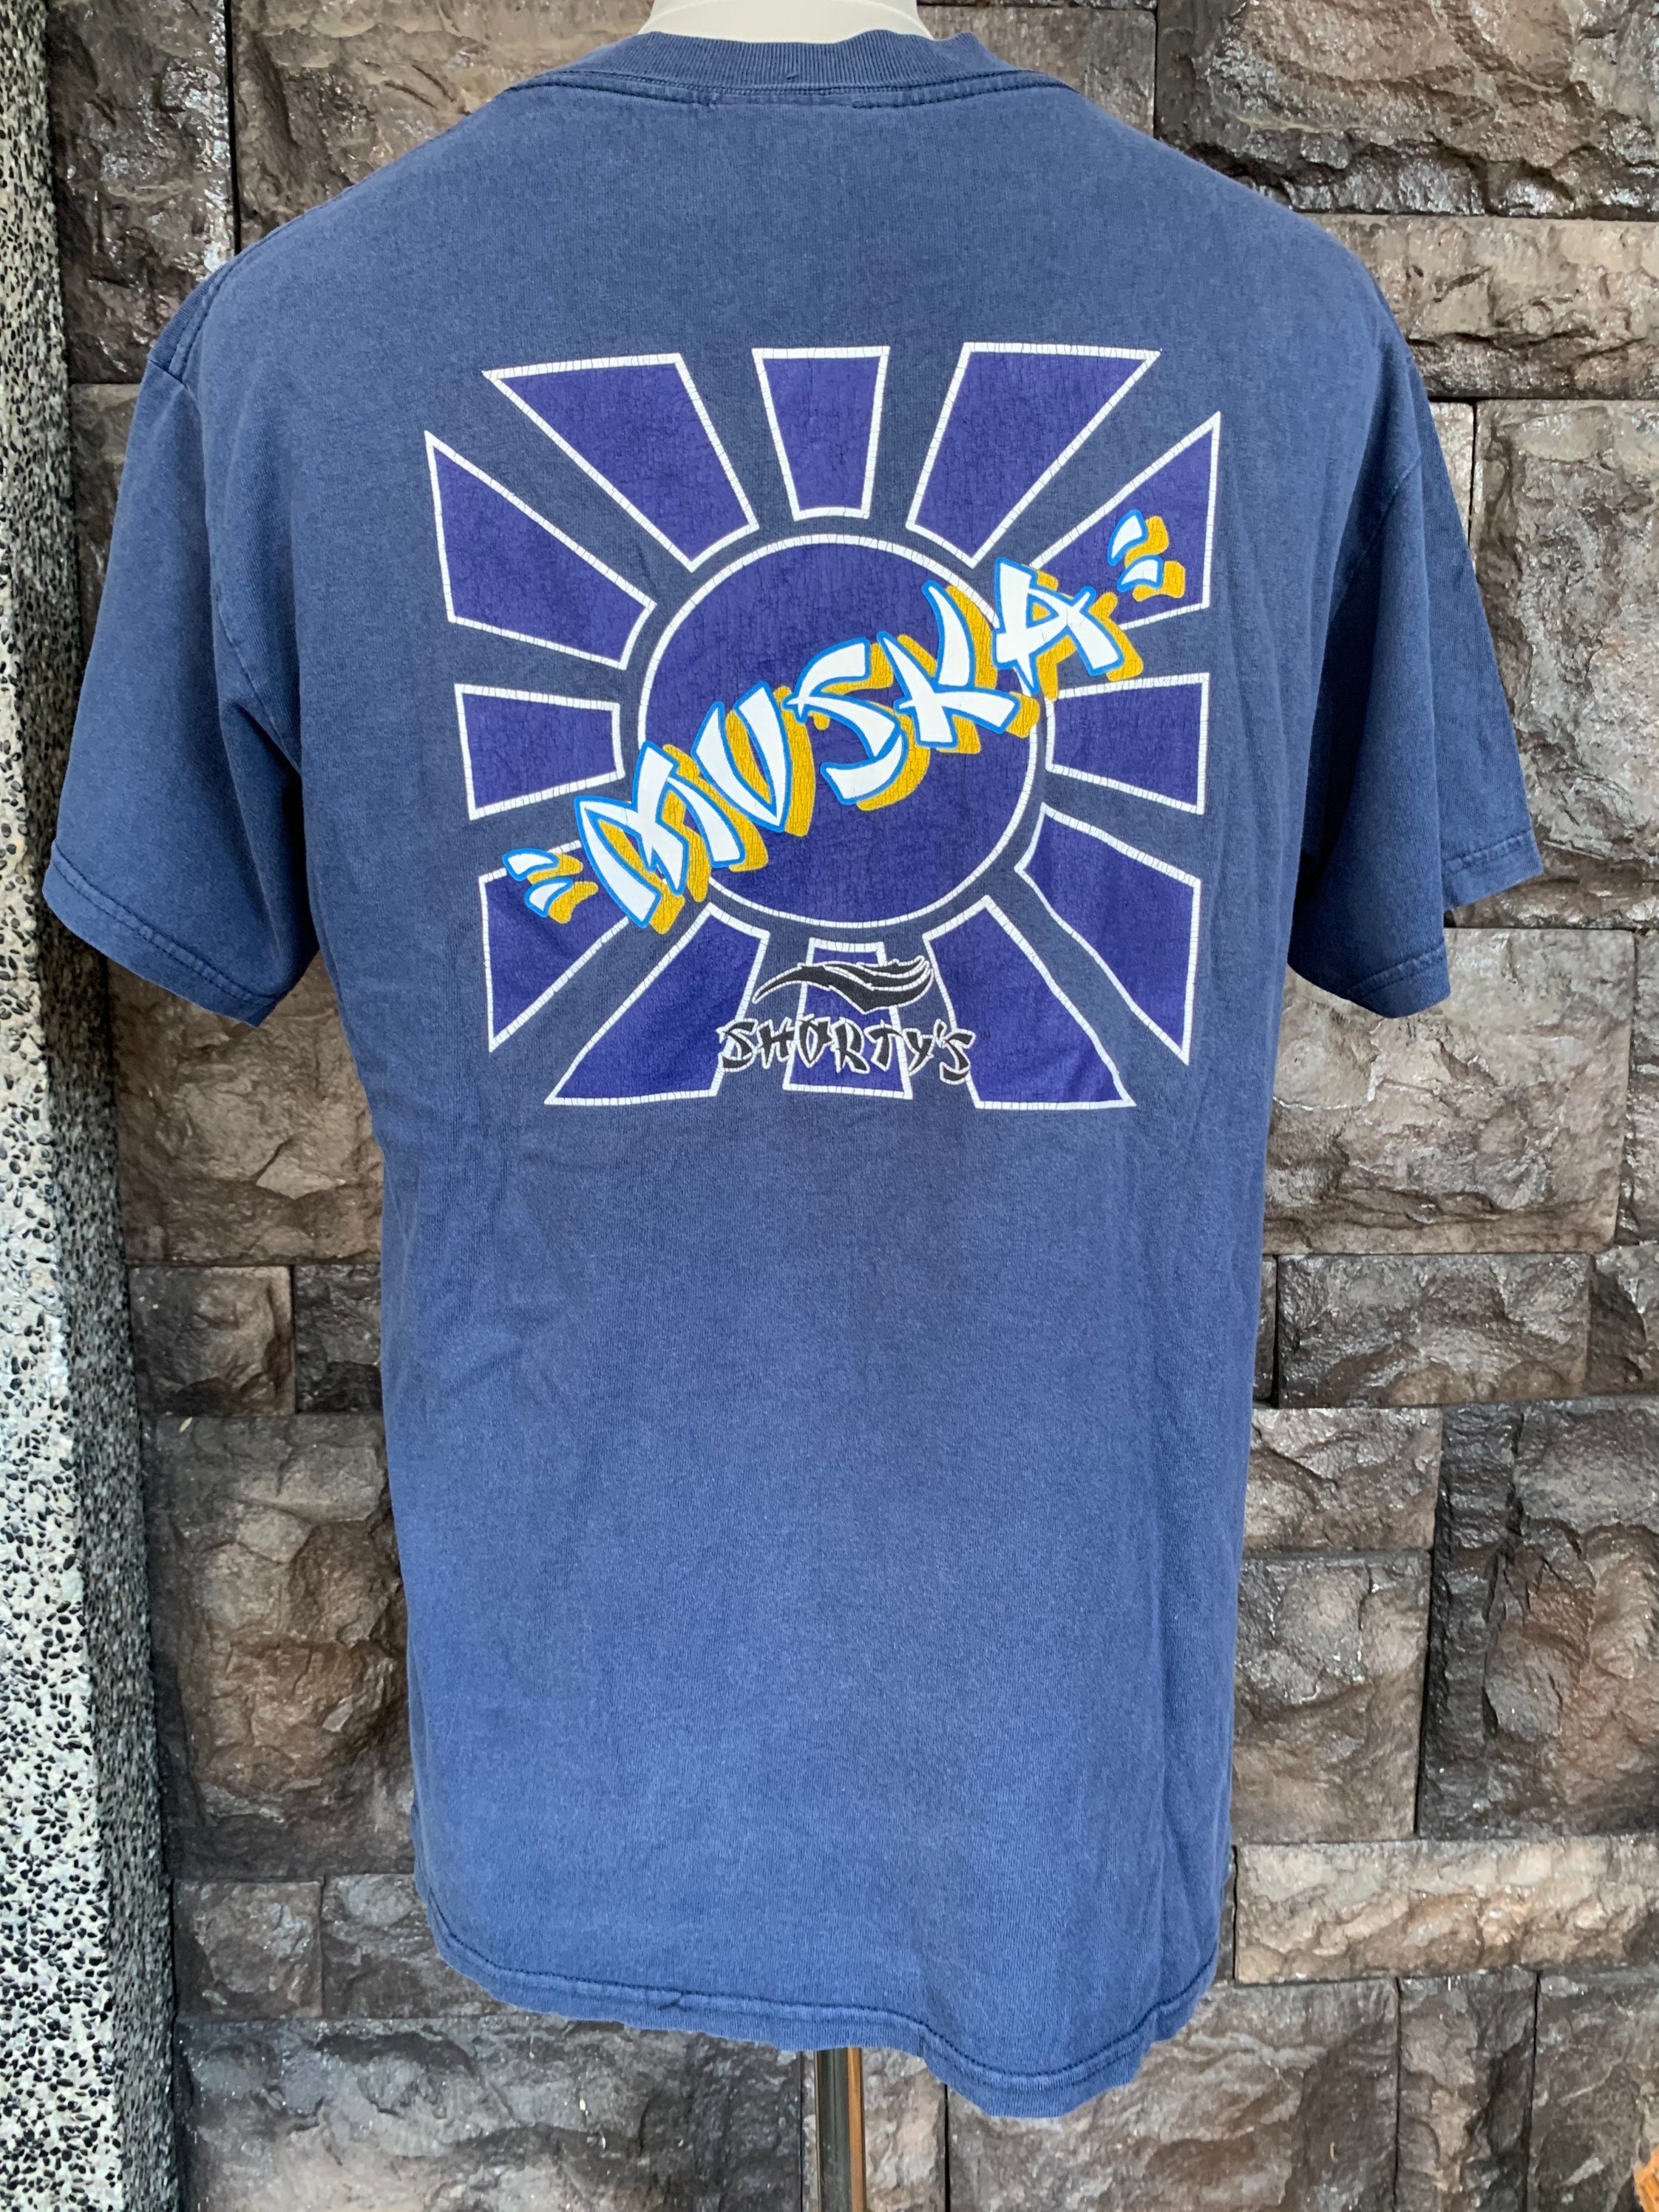 Vintage Shortys skateboard t-shirt Chad Muska | Etsy